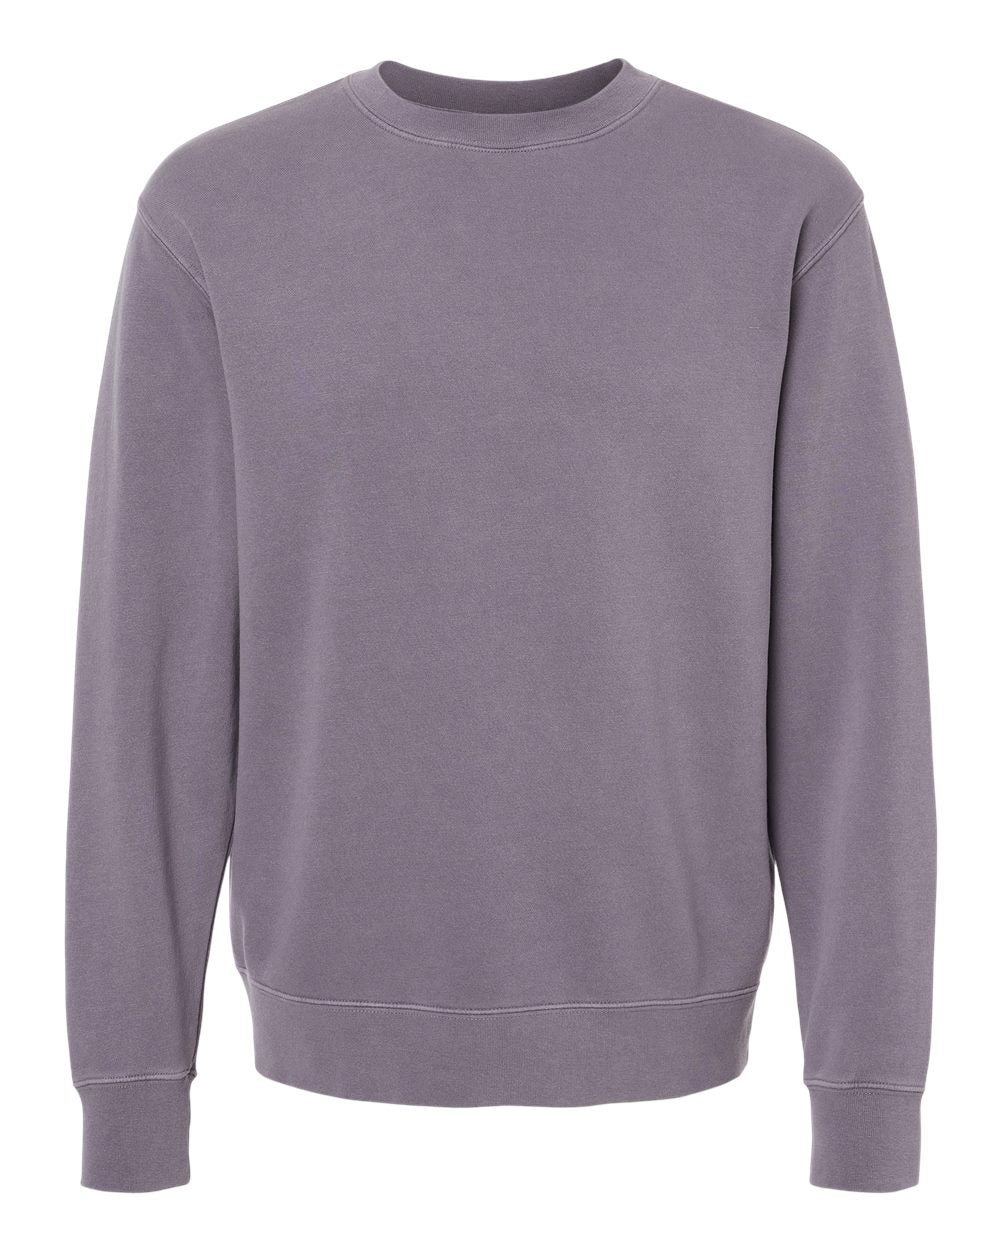 Independent Pigment-Dyed Crewneck Sweatshirt (PRM3500) in Pigment Plum